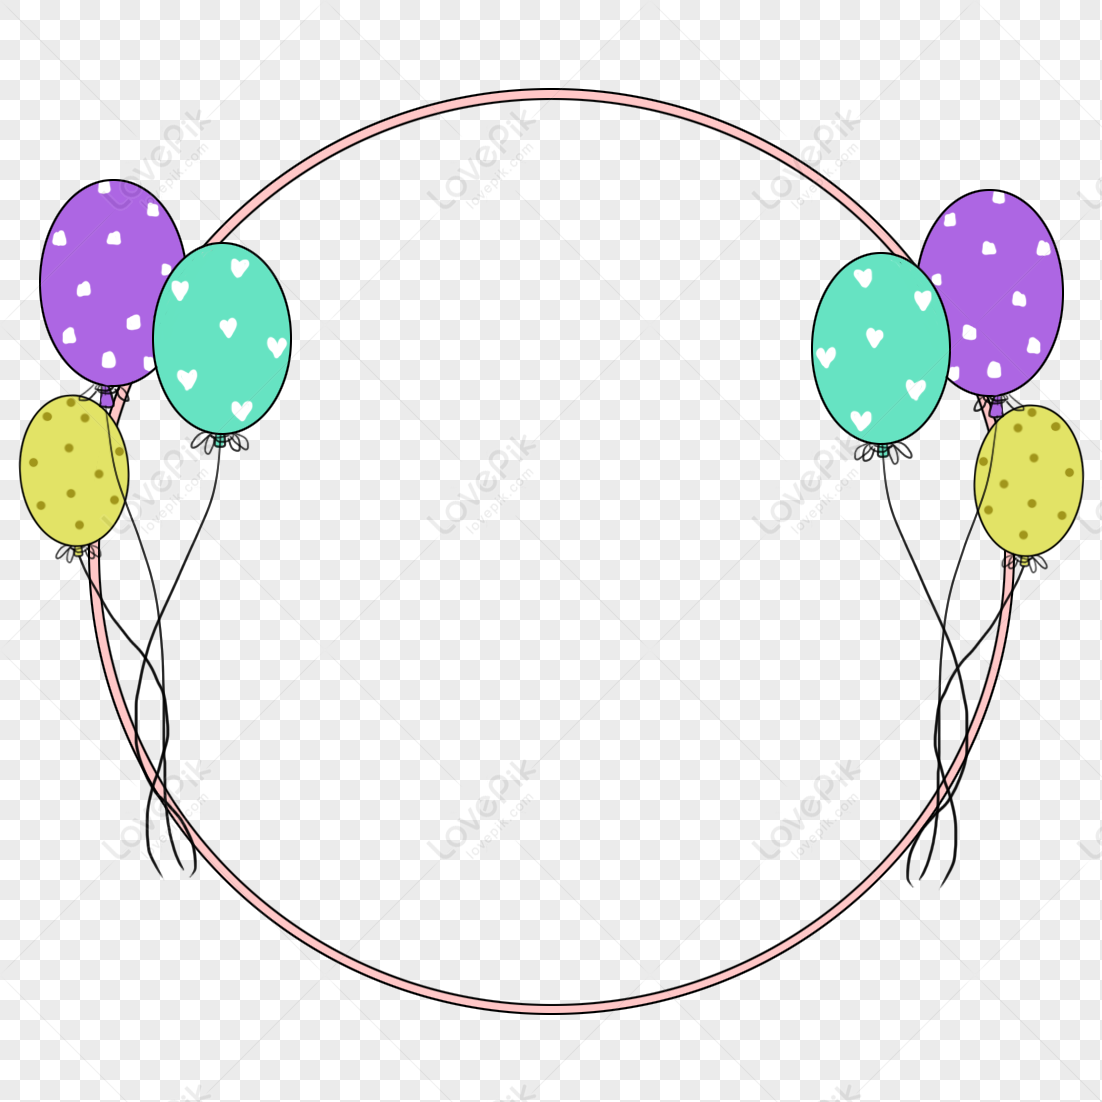 birthday balloons border png